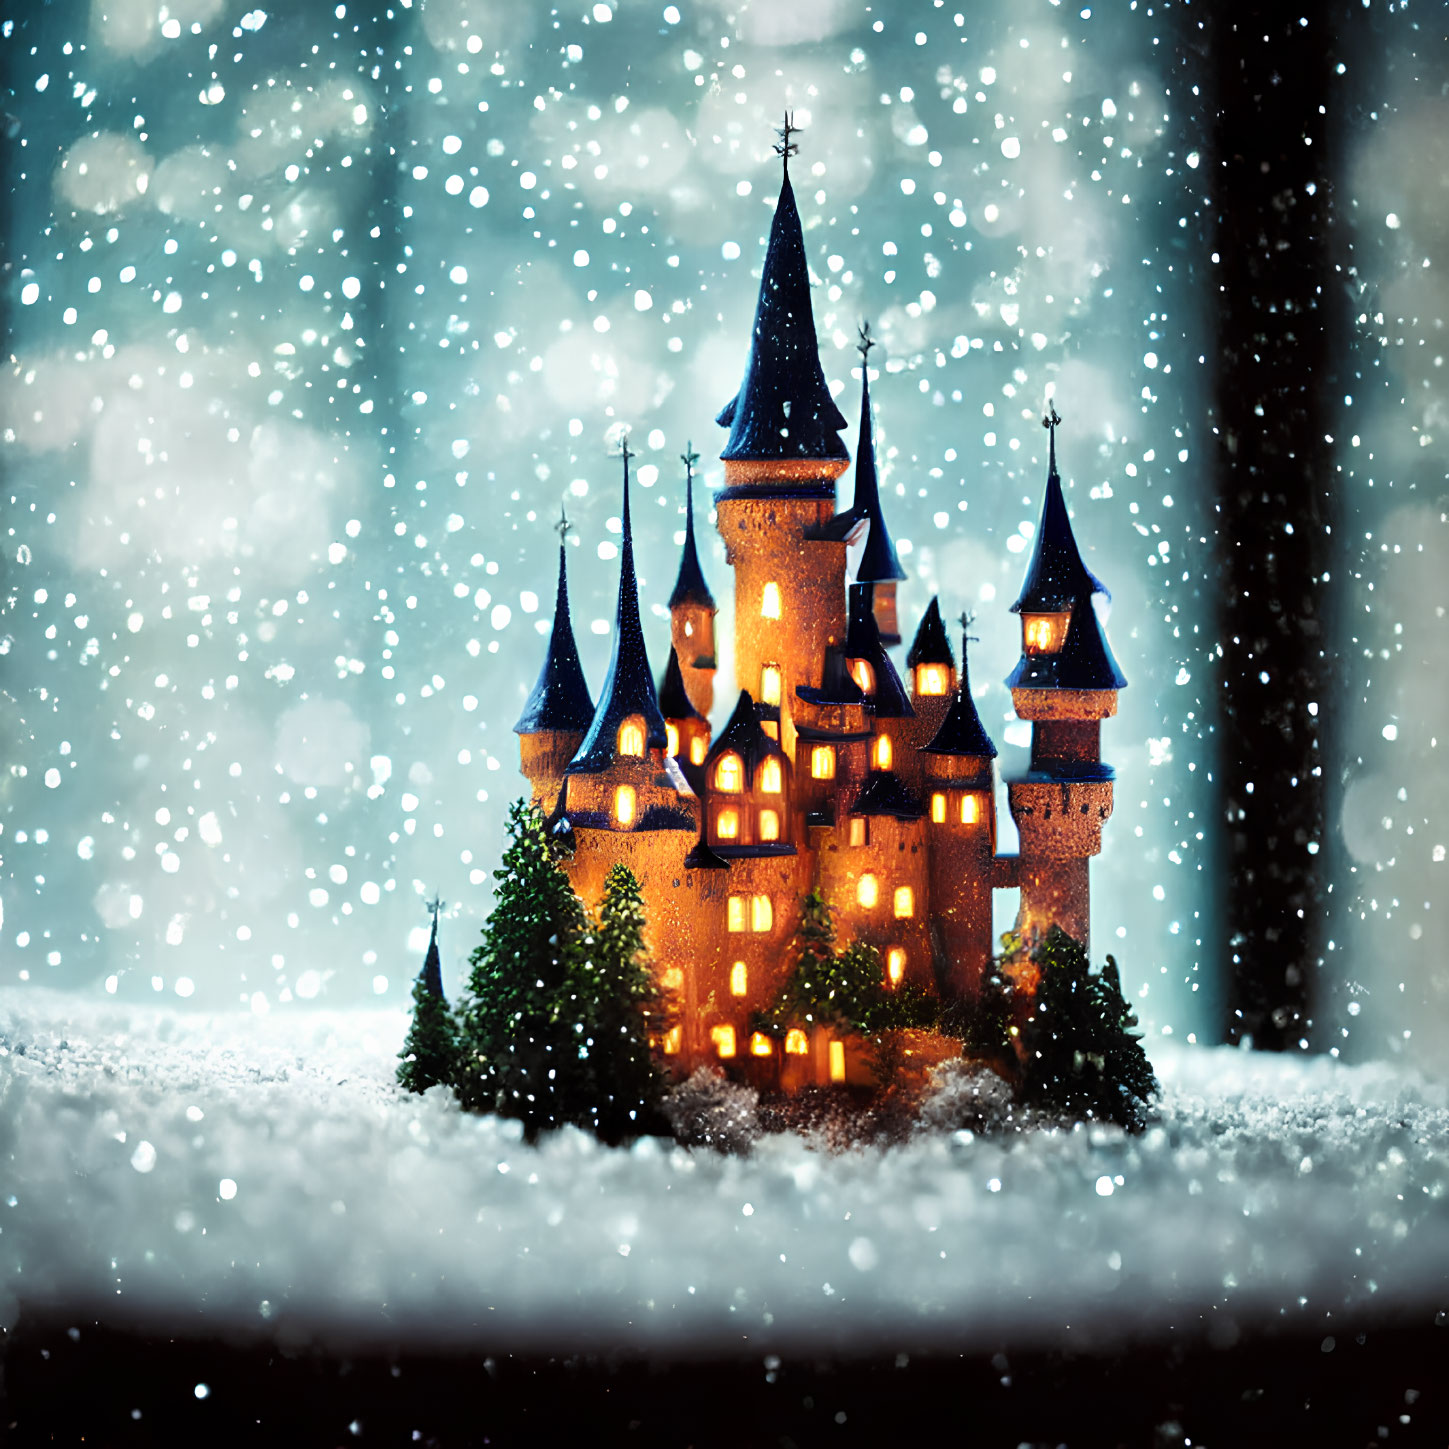 Miniature Castle in Snowy Landscape with Illuminated Windows